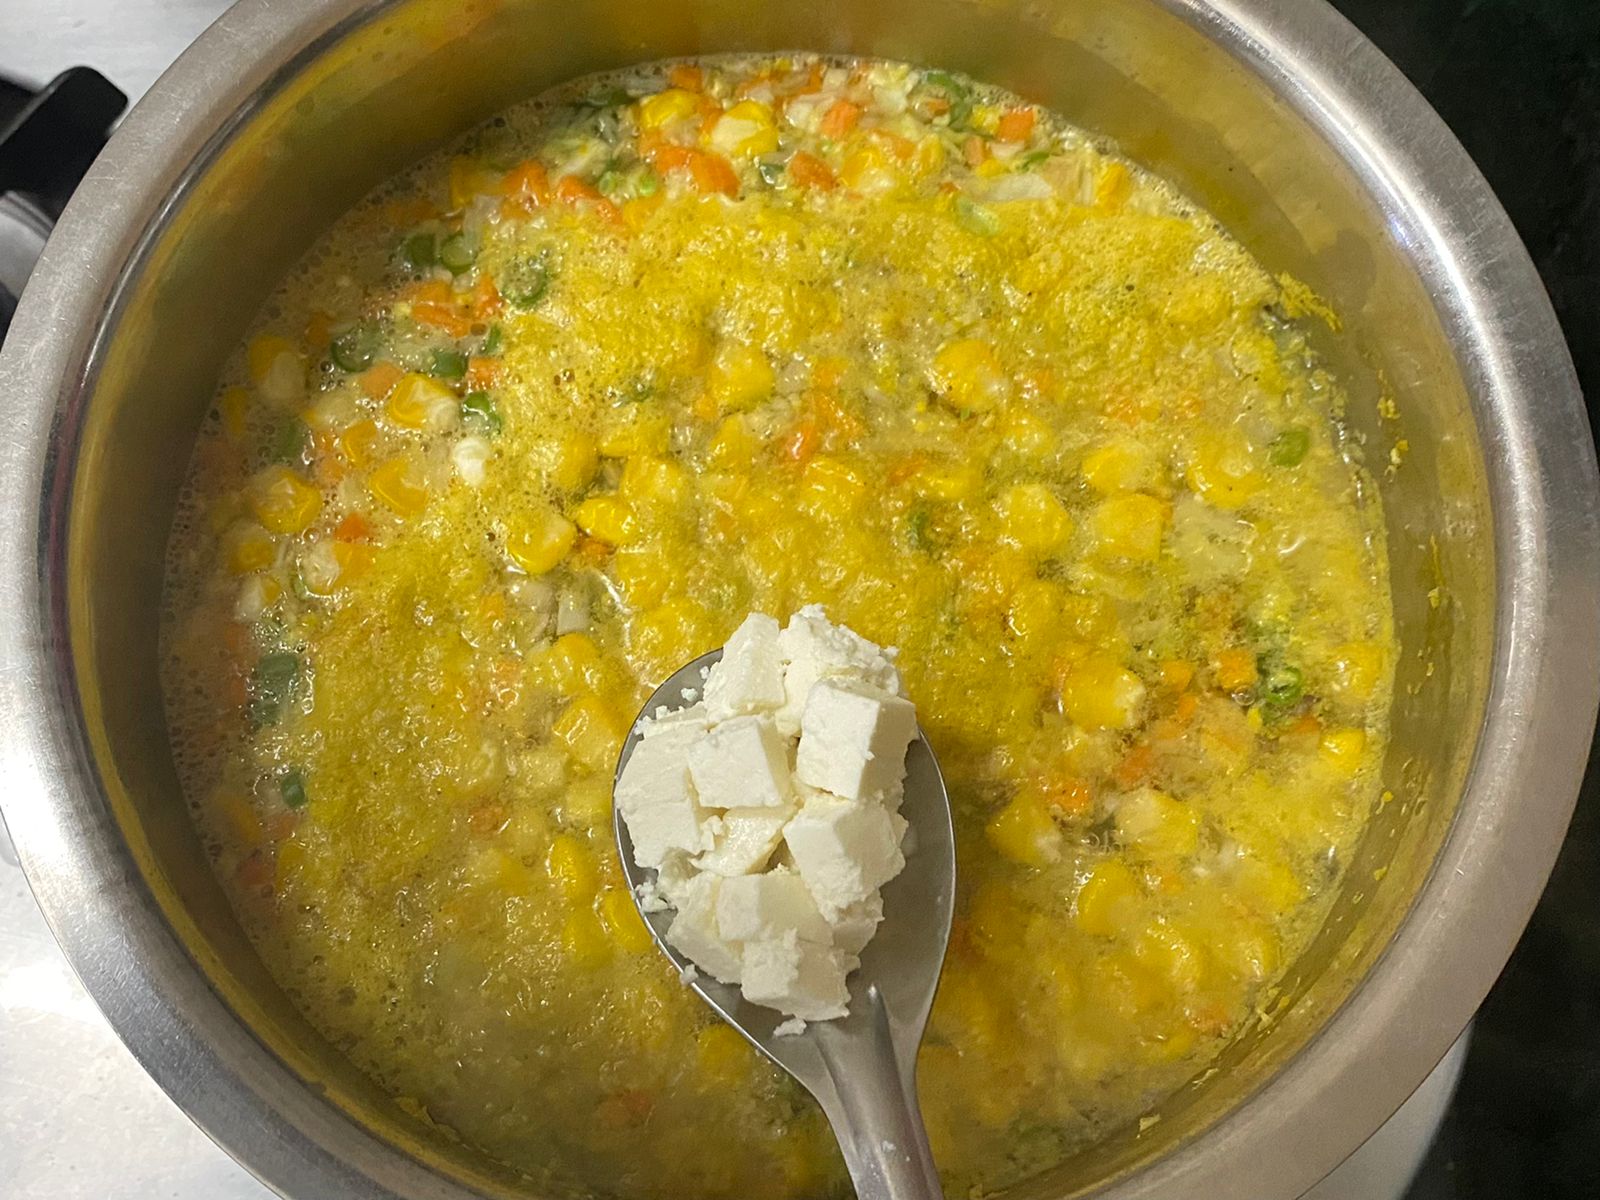 Healthy Vegetable Soup Recipe